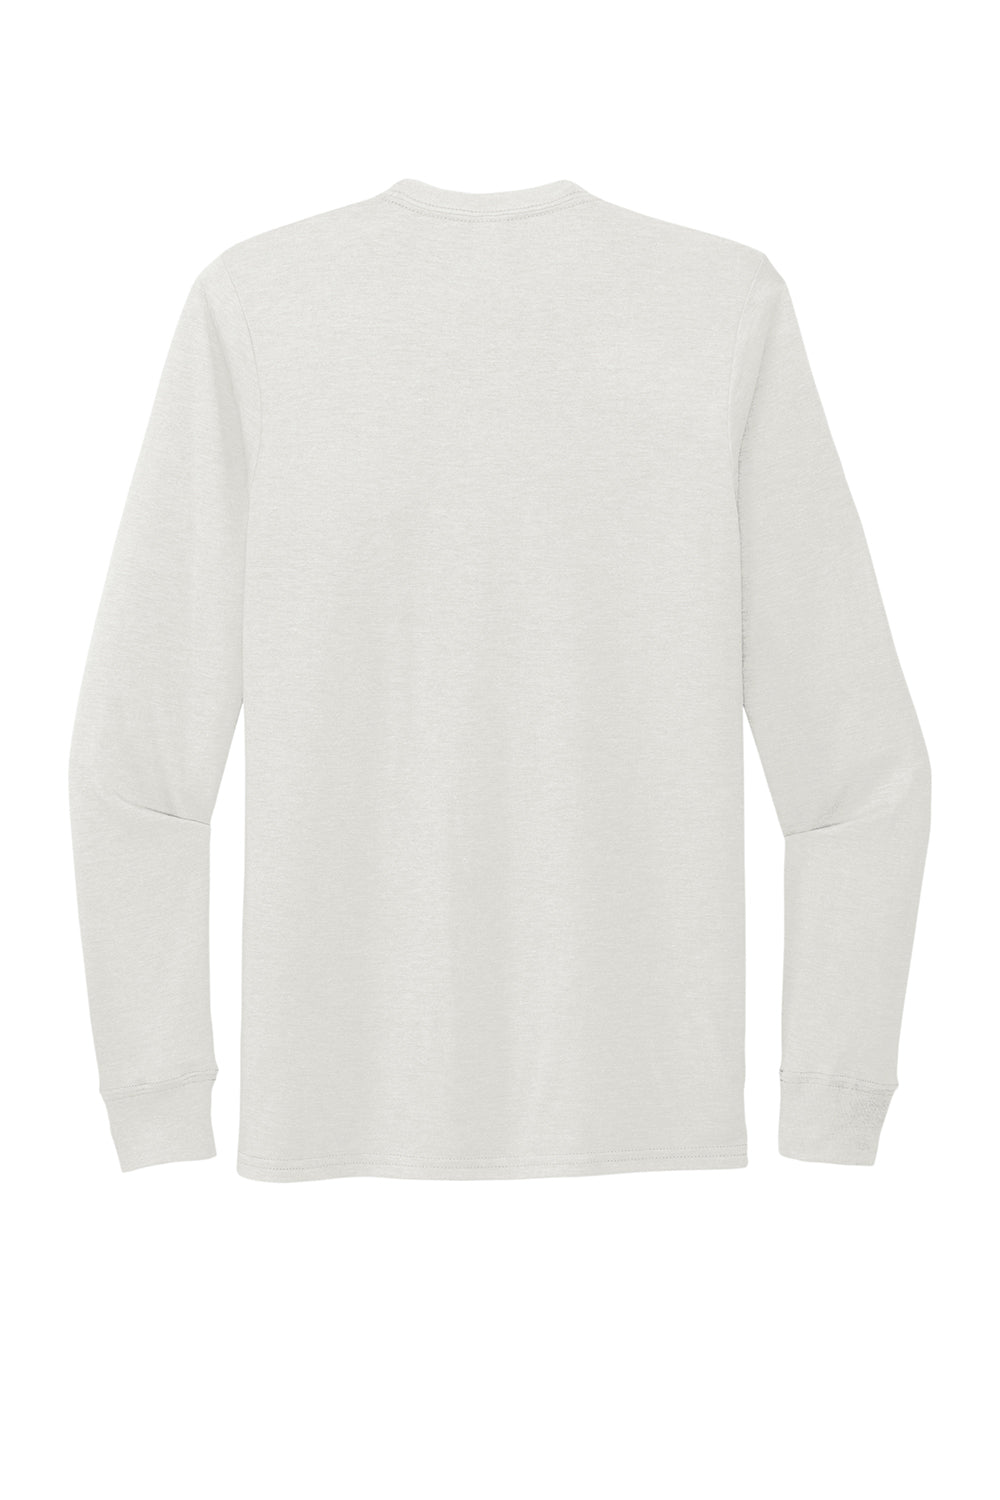 Allmade AL6004 Mens Long Sleeve Crewneck T-Shirt Fairly White Flat Back